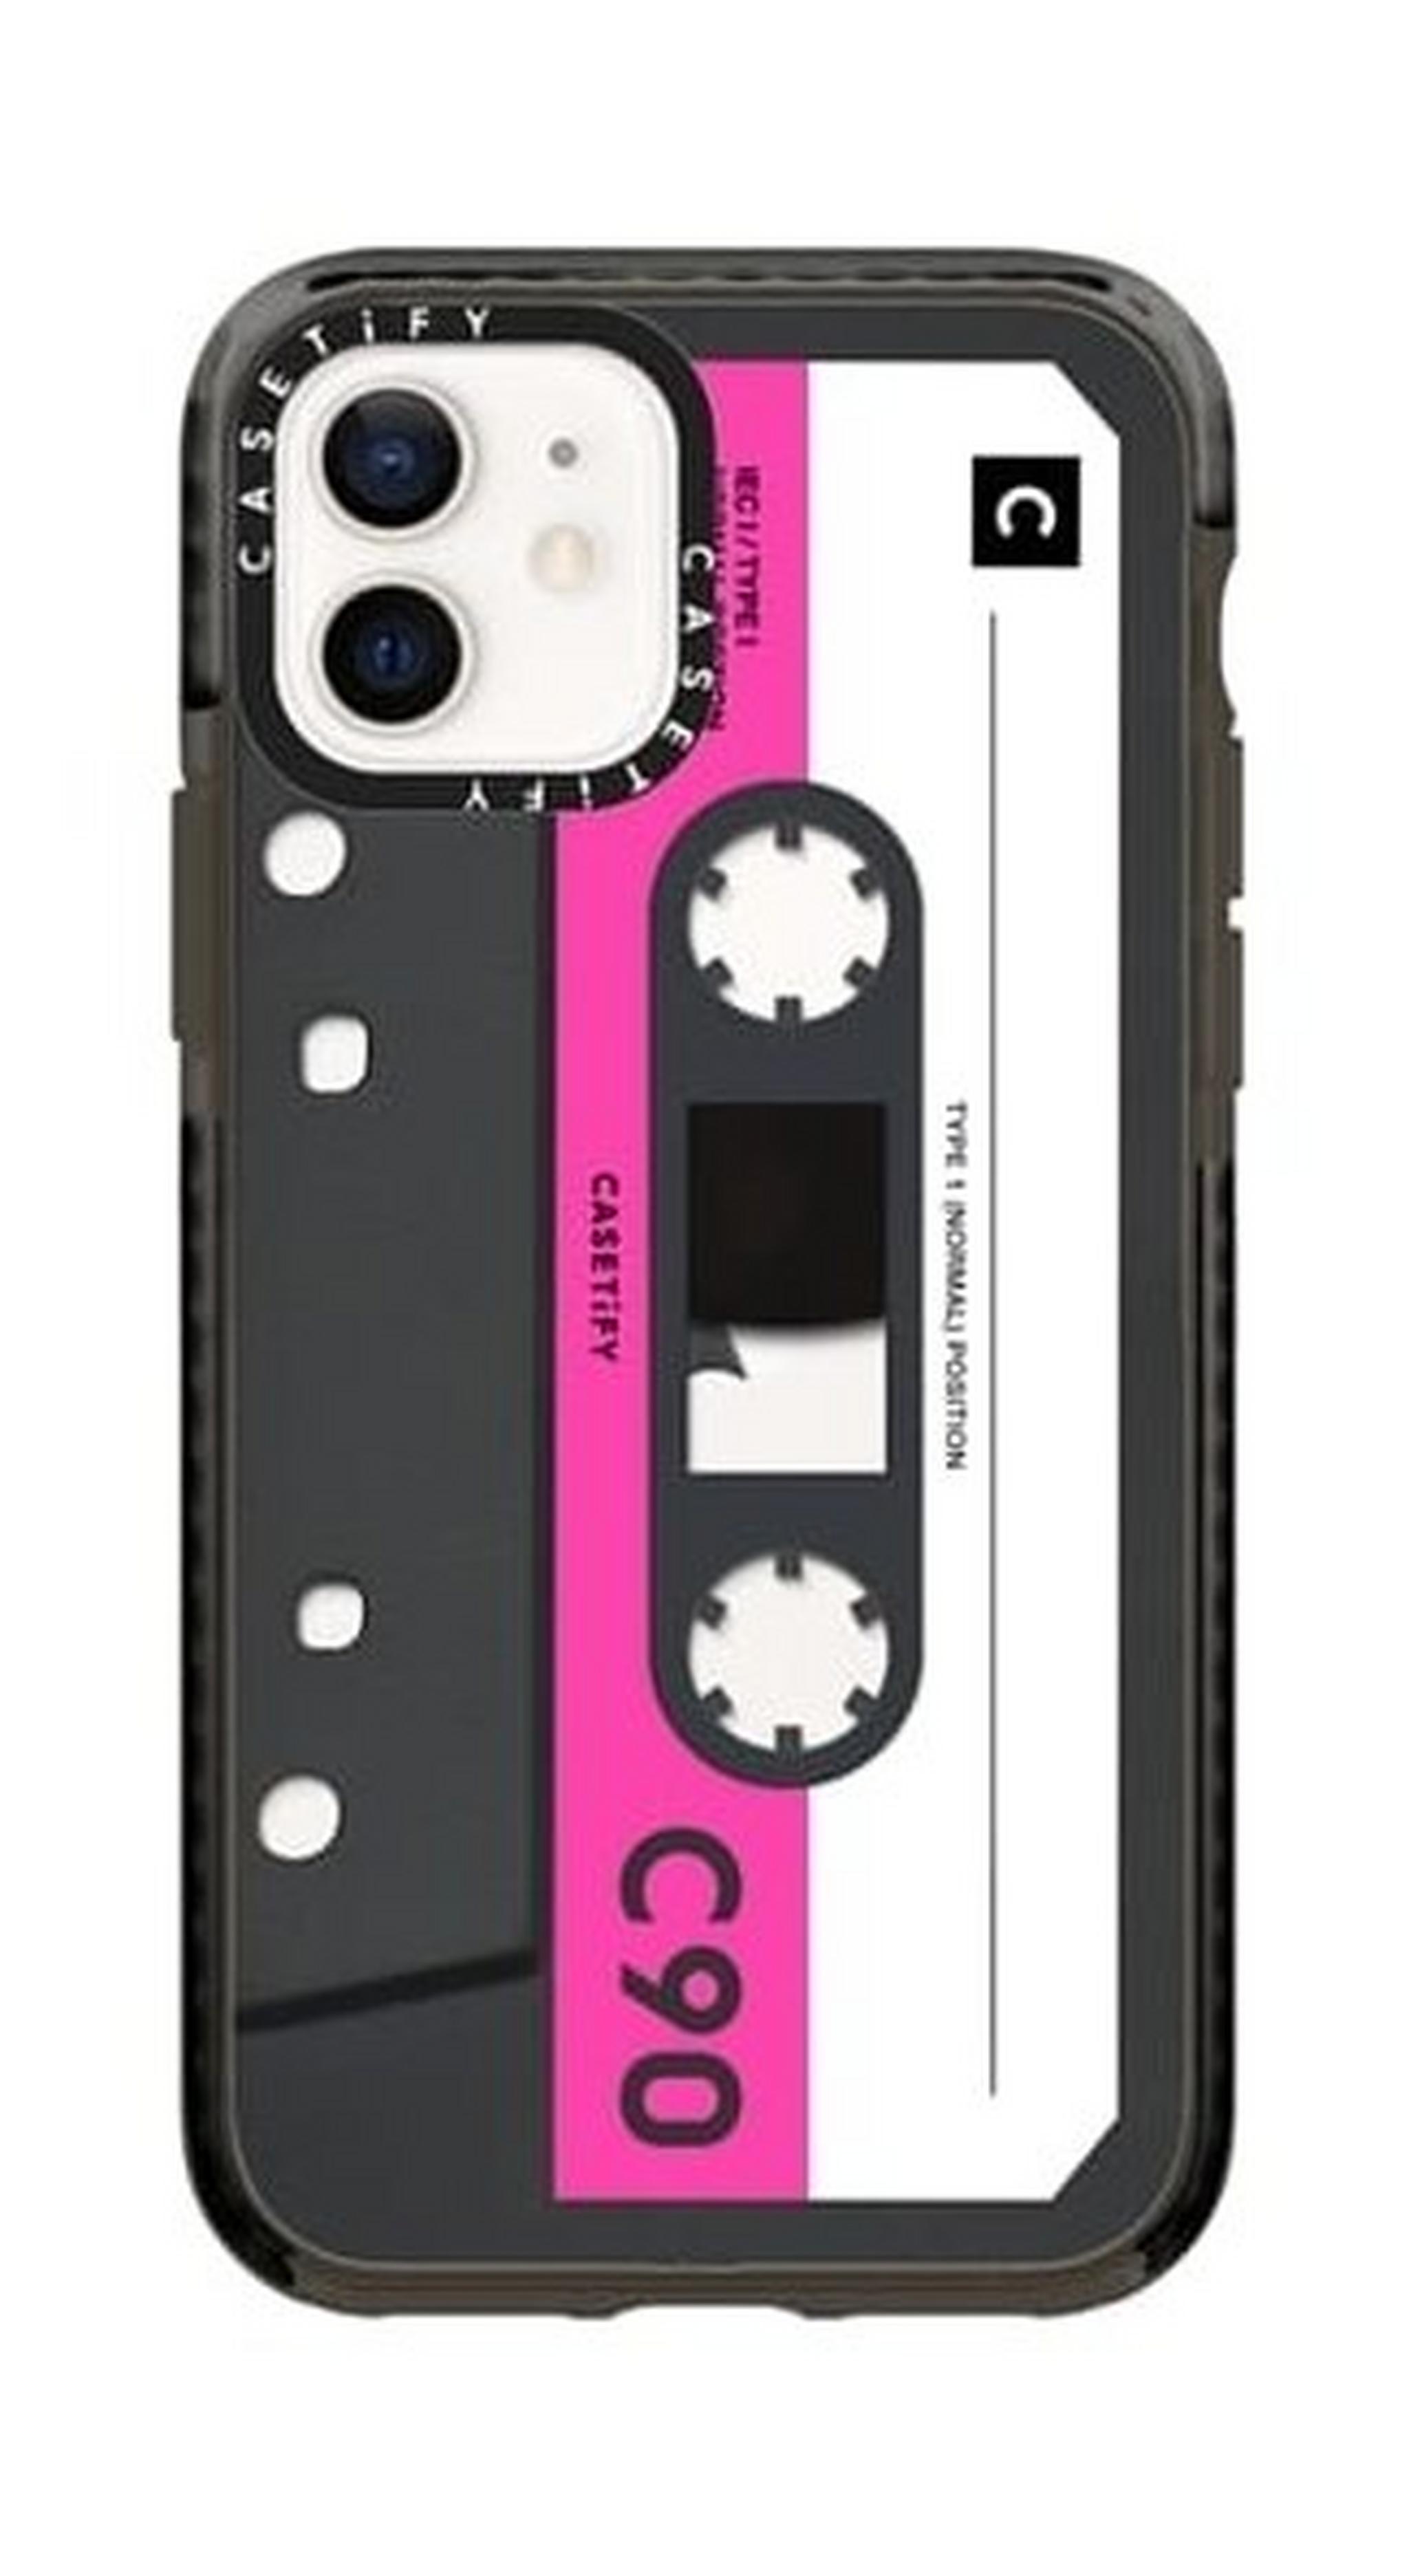 Casetify Cassette iPhone 12 Mini Back Case - Pink